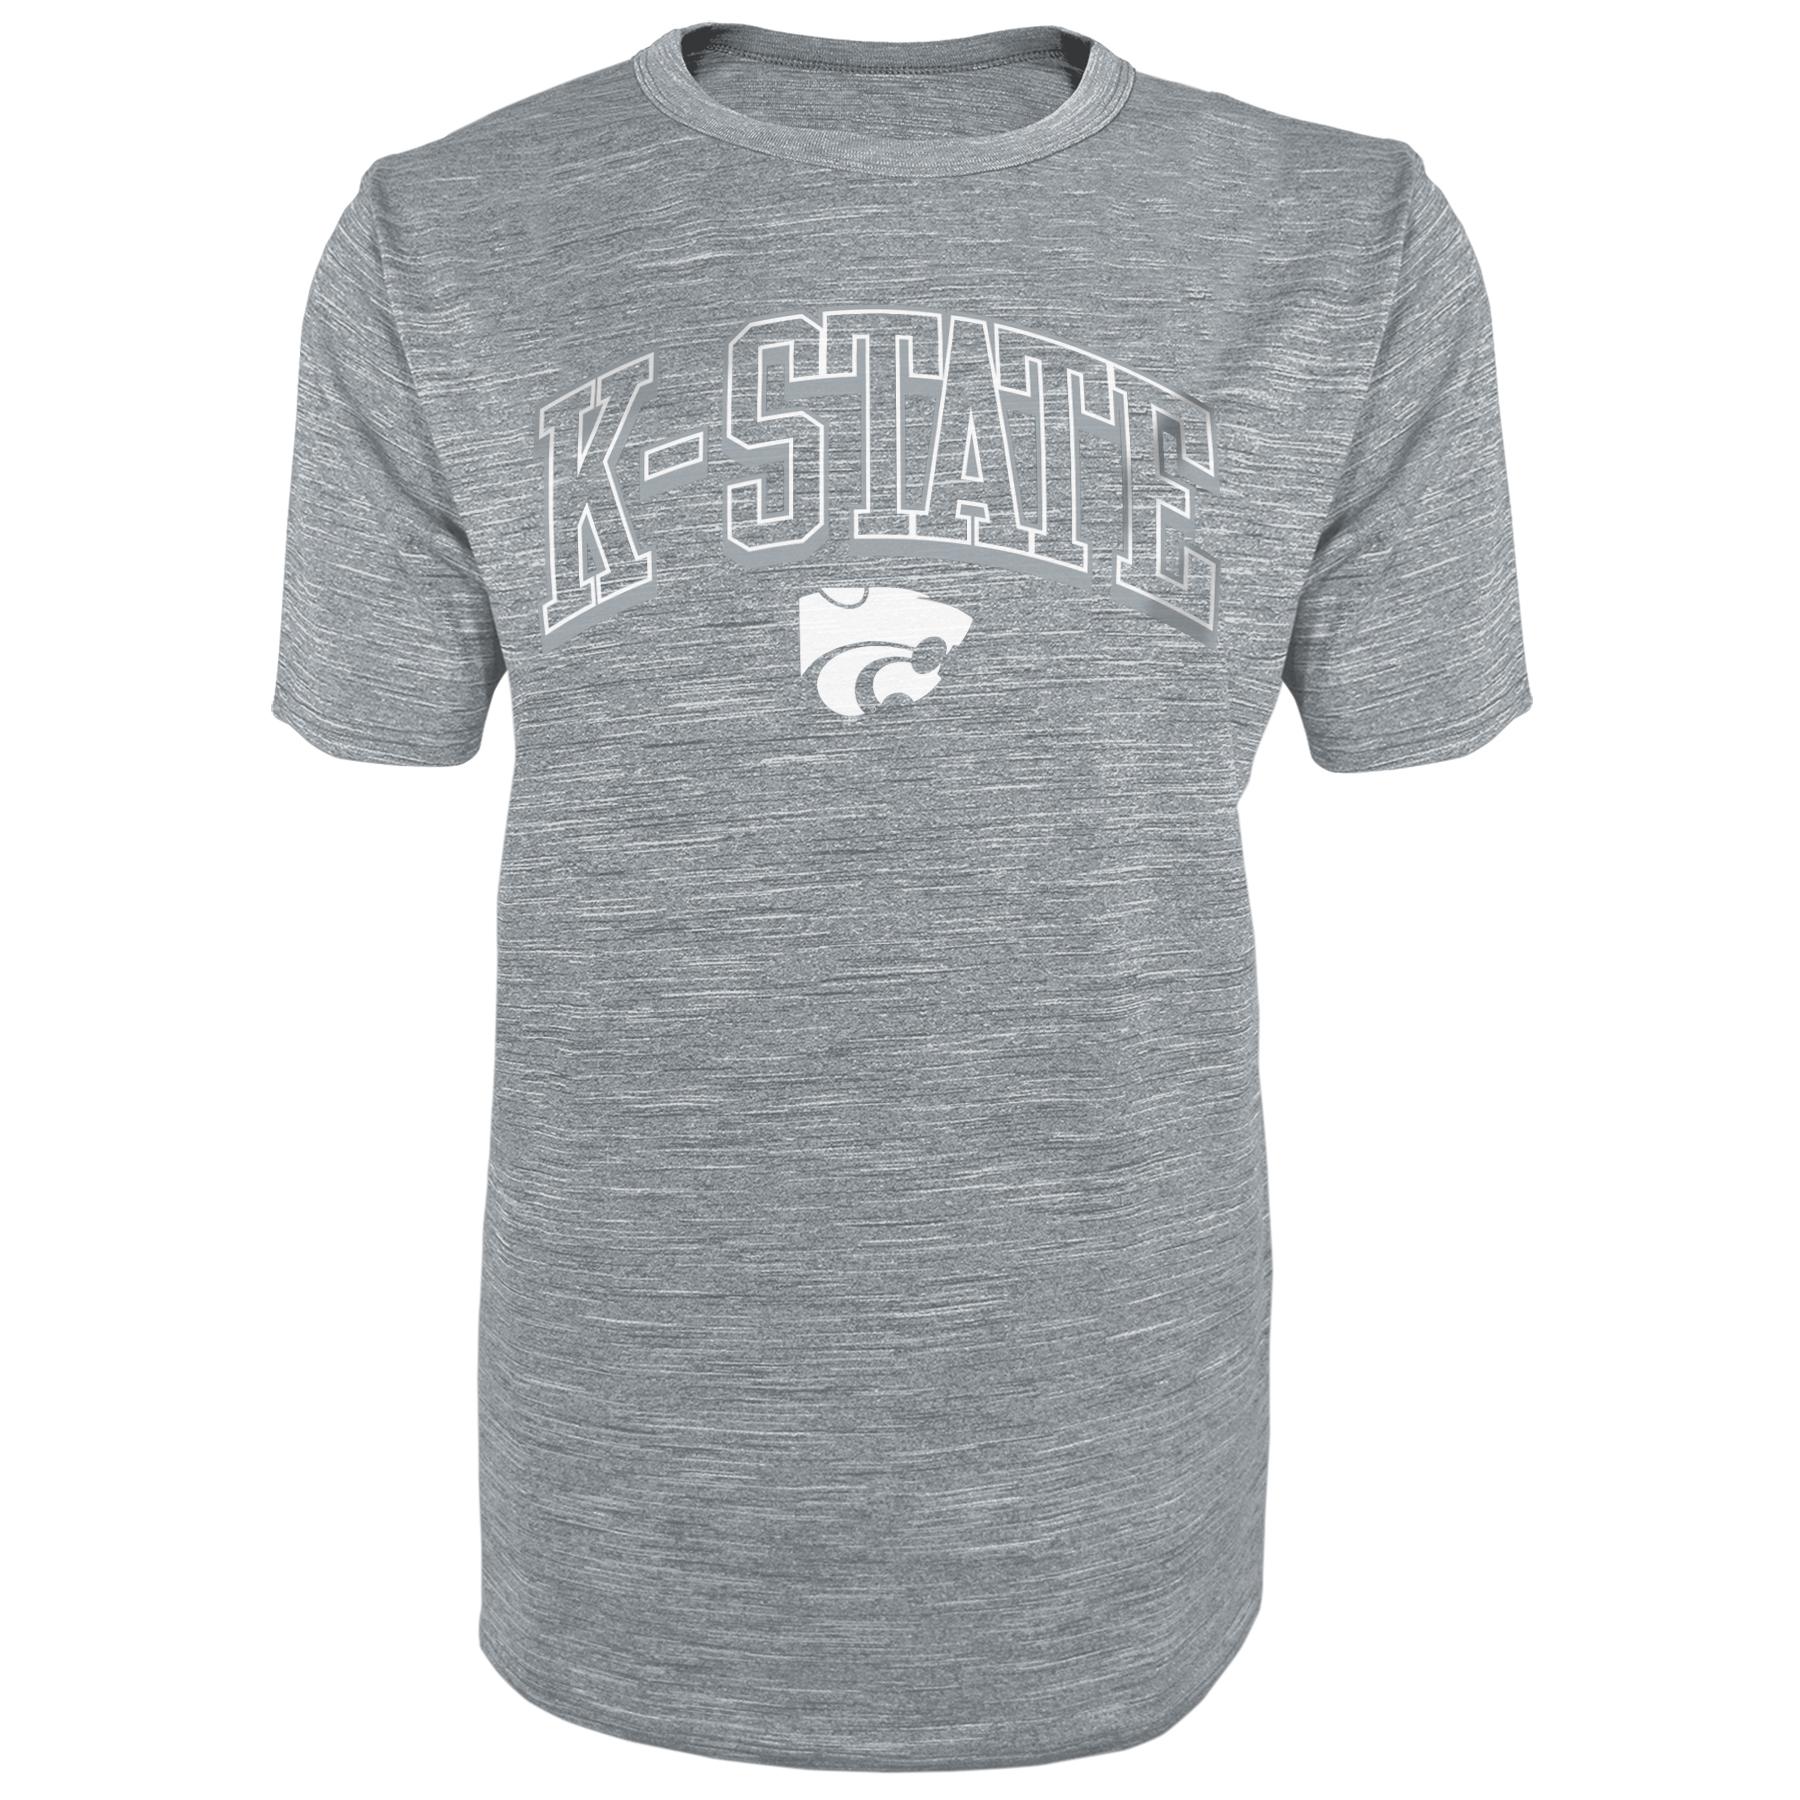 NCAA Men's Big & Tall Graphic T-Shirt - Kansas State Wildcats